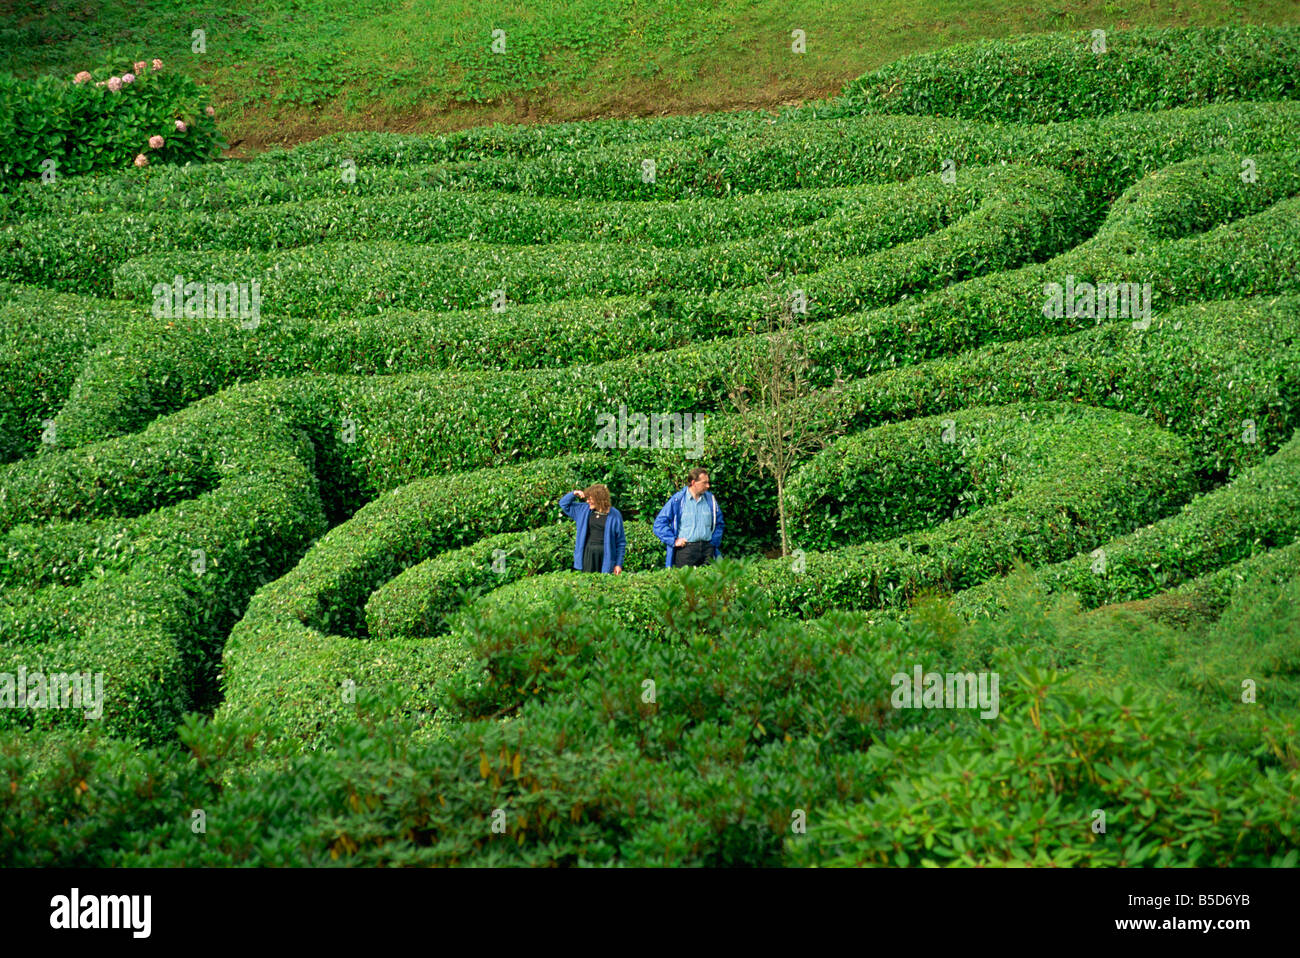 Two people lost in Glendurgan Maze, near Falmouth, Cornwall, England, Europe Stock Photo